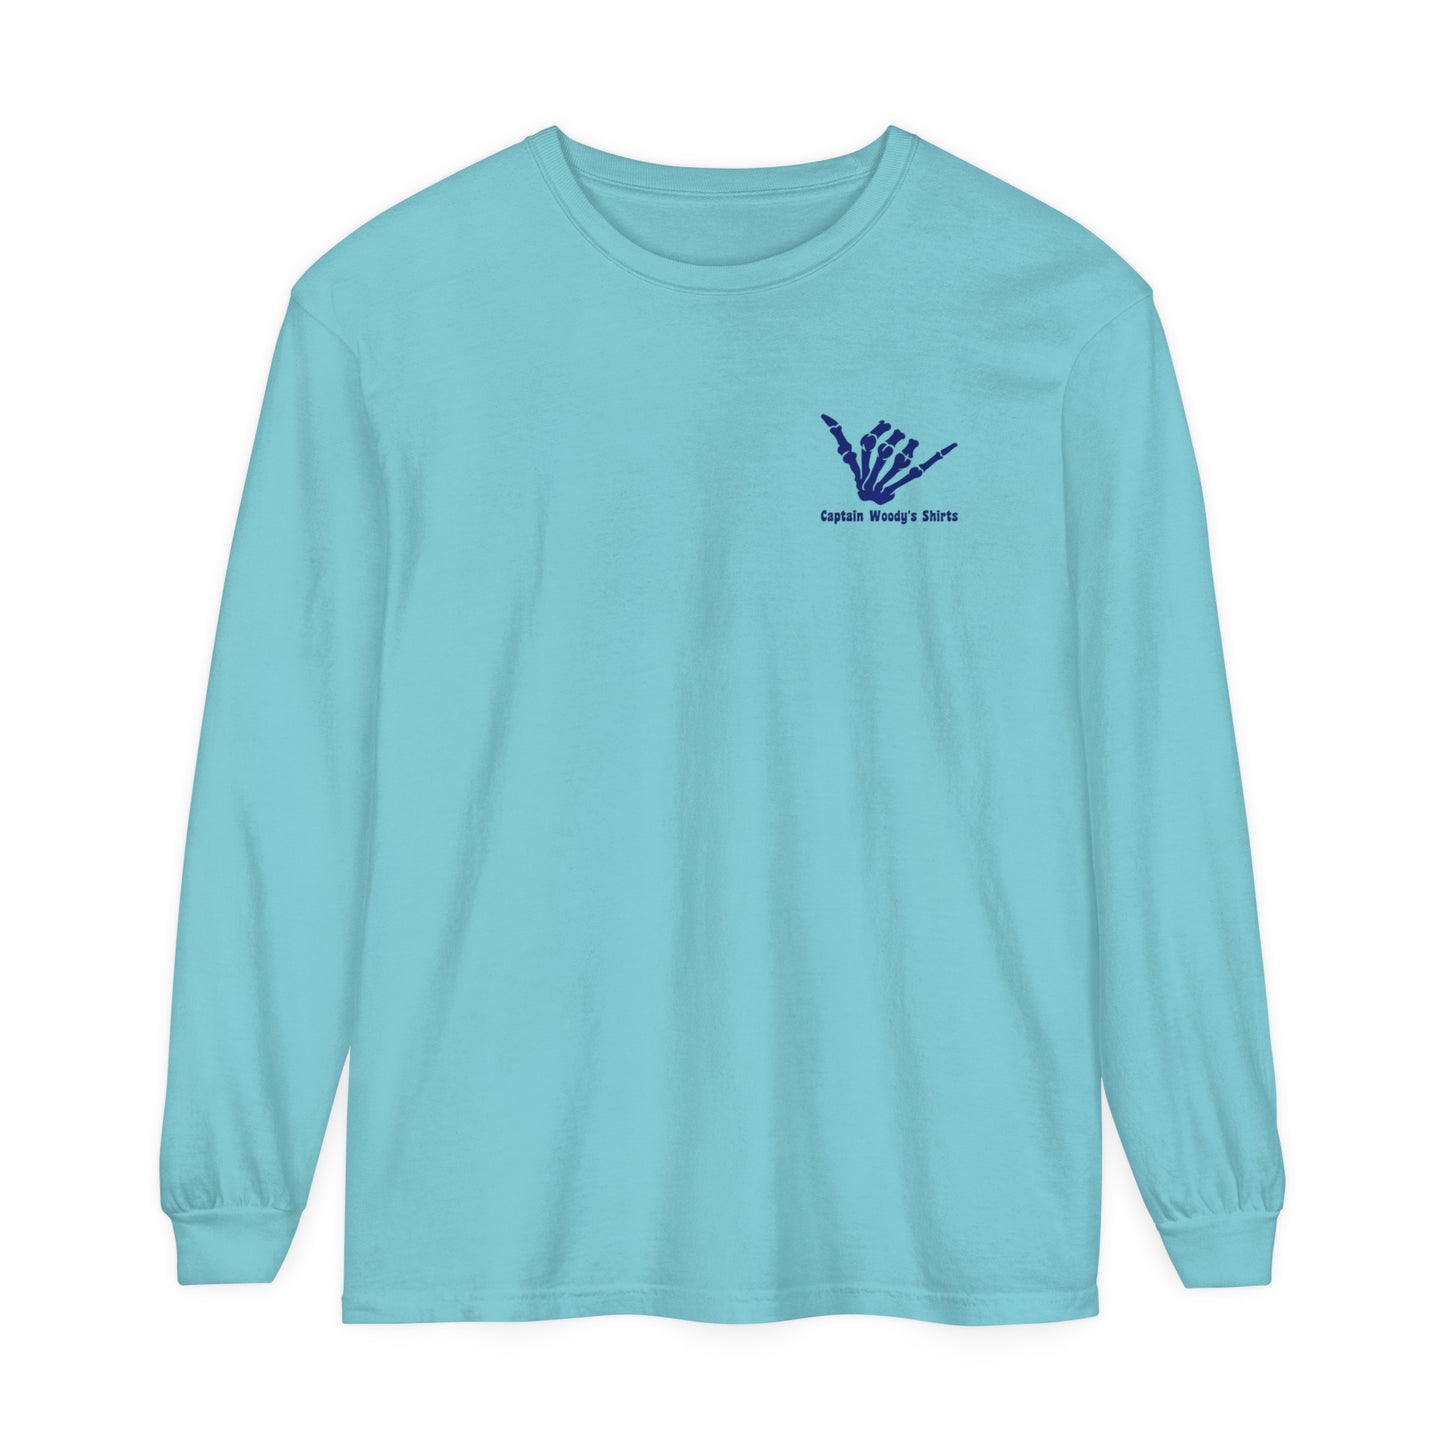 SURF'S UP Comfort Colors Unisex Long Sleeve T-Shirt